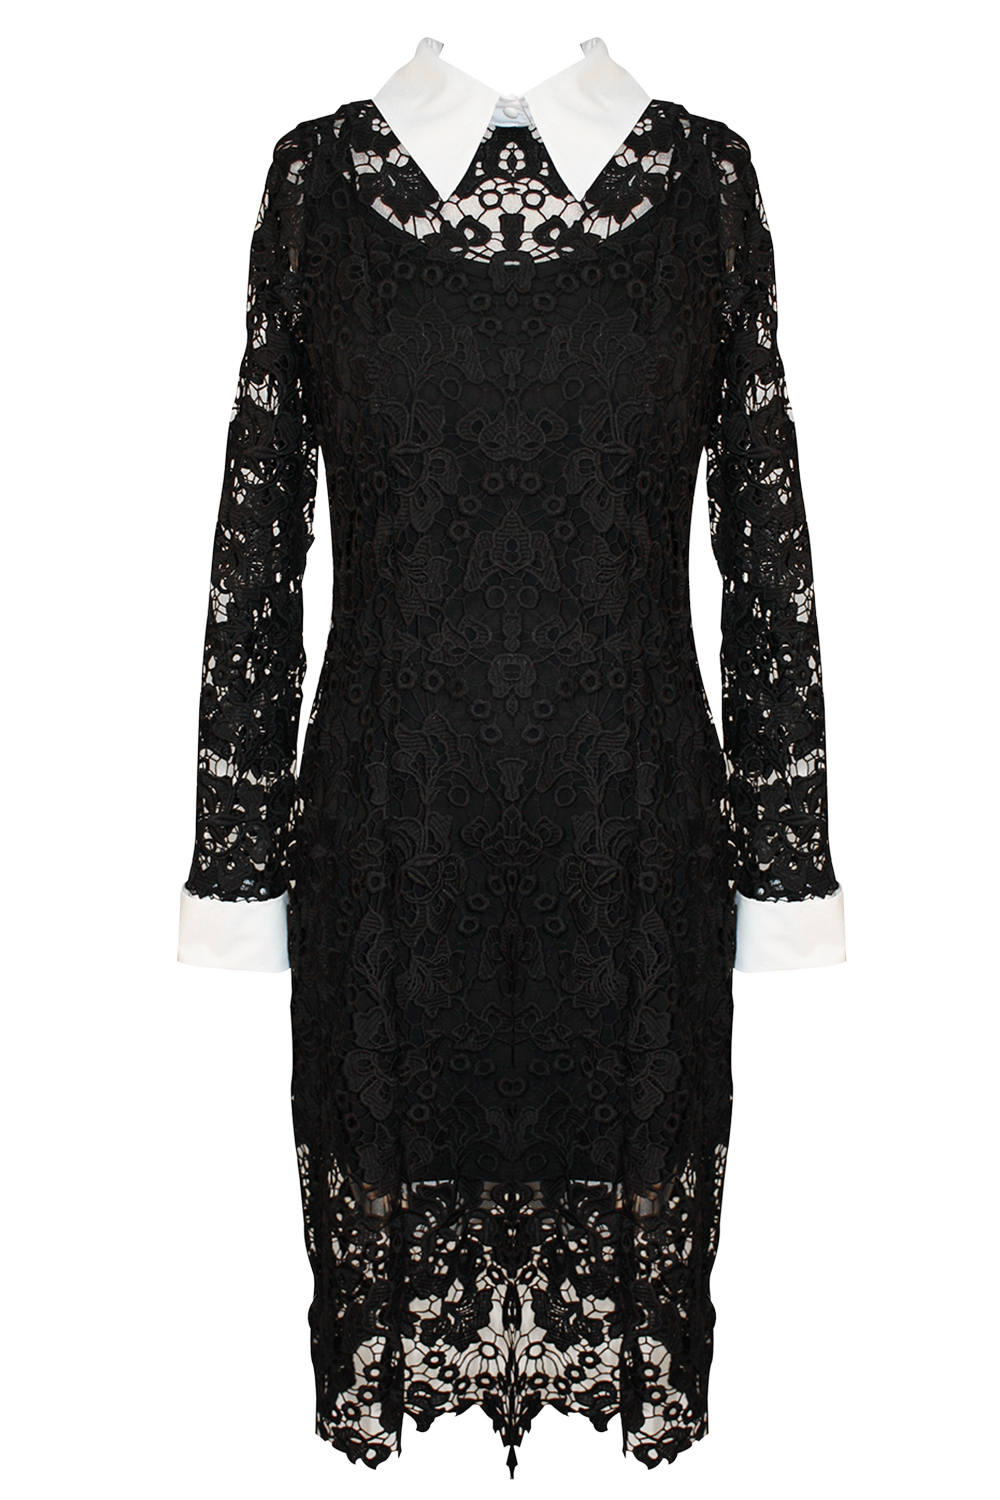 Dress, $389, by Trelise Cooper Boardroom.